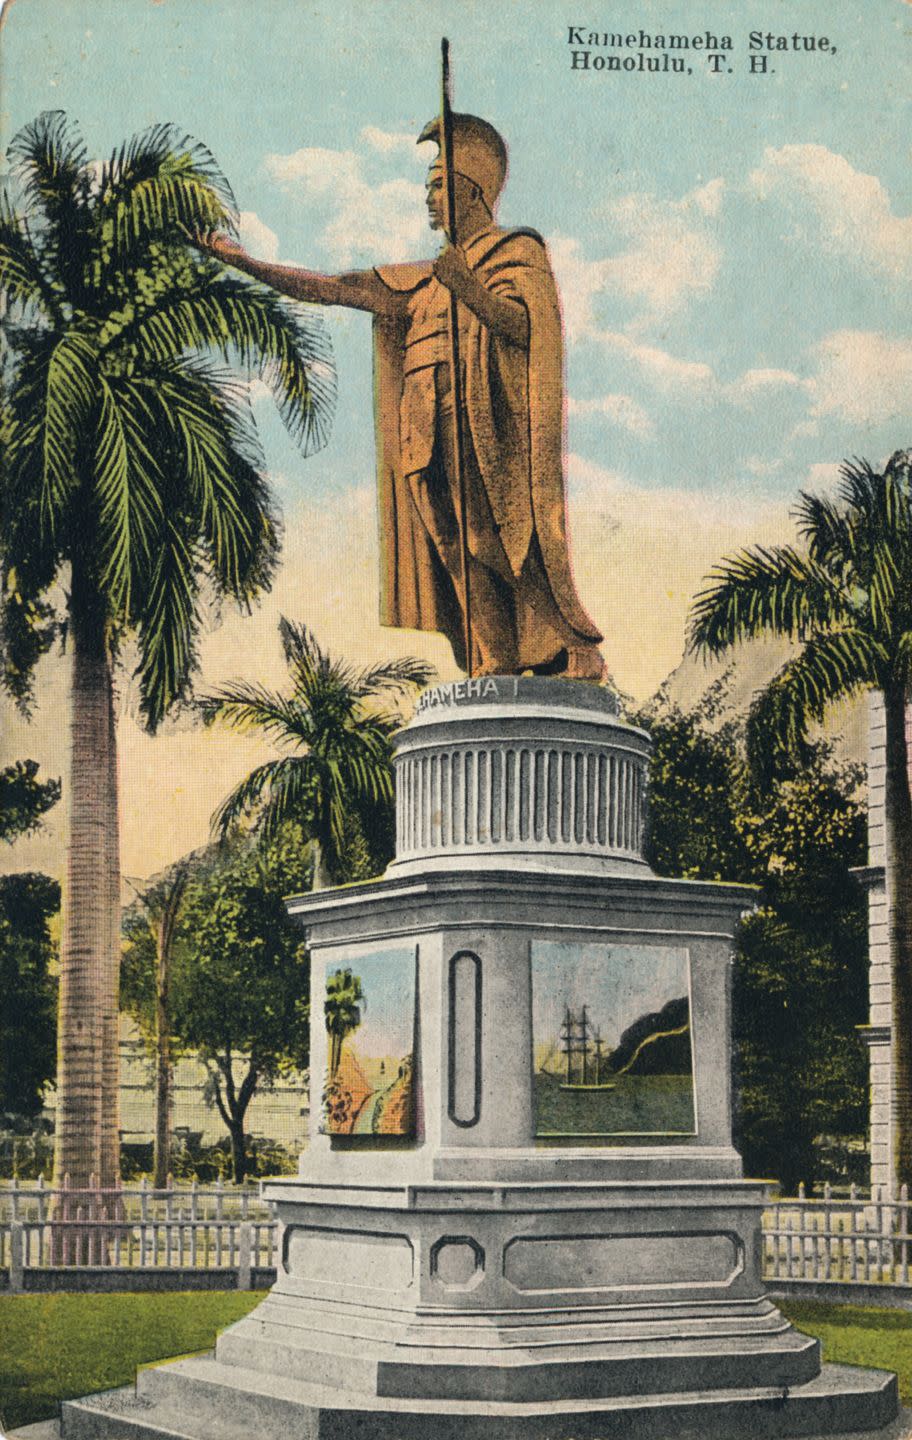 kamehameha statue, honolulu, hawaii, c1920